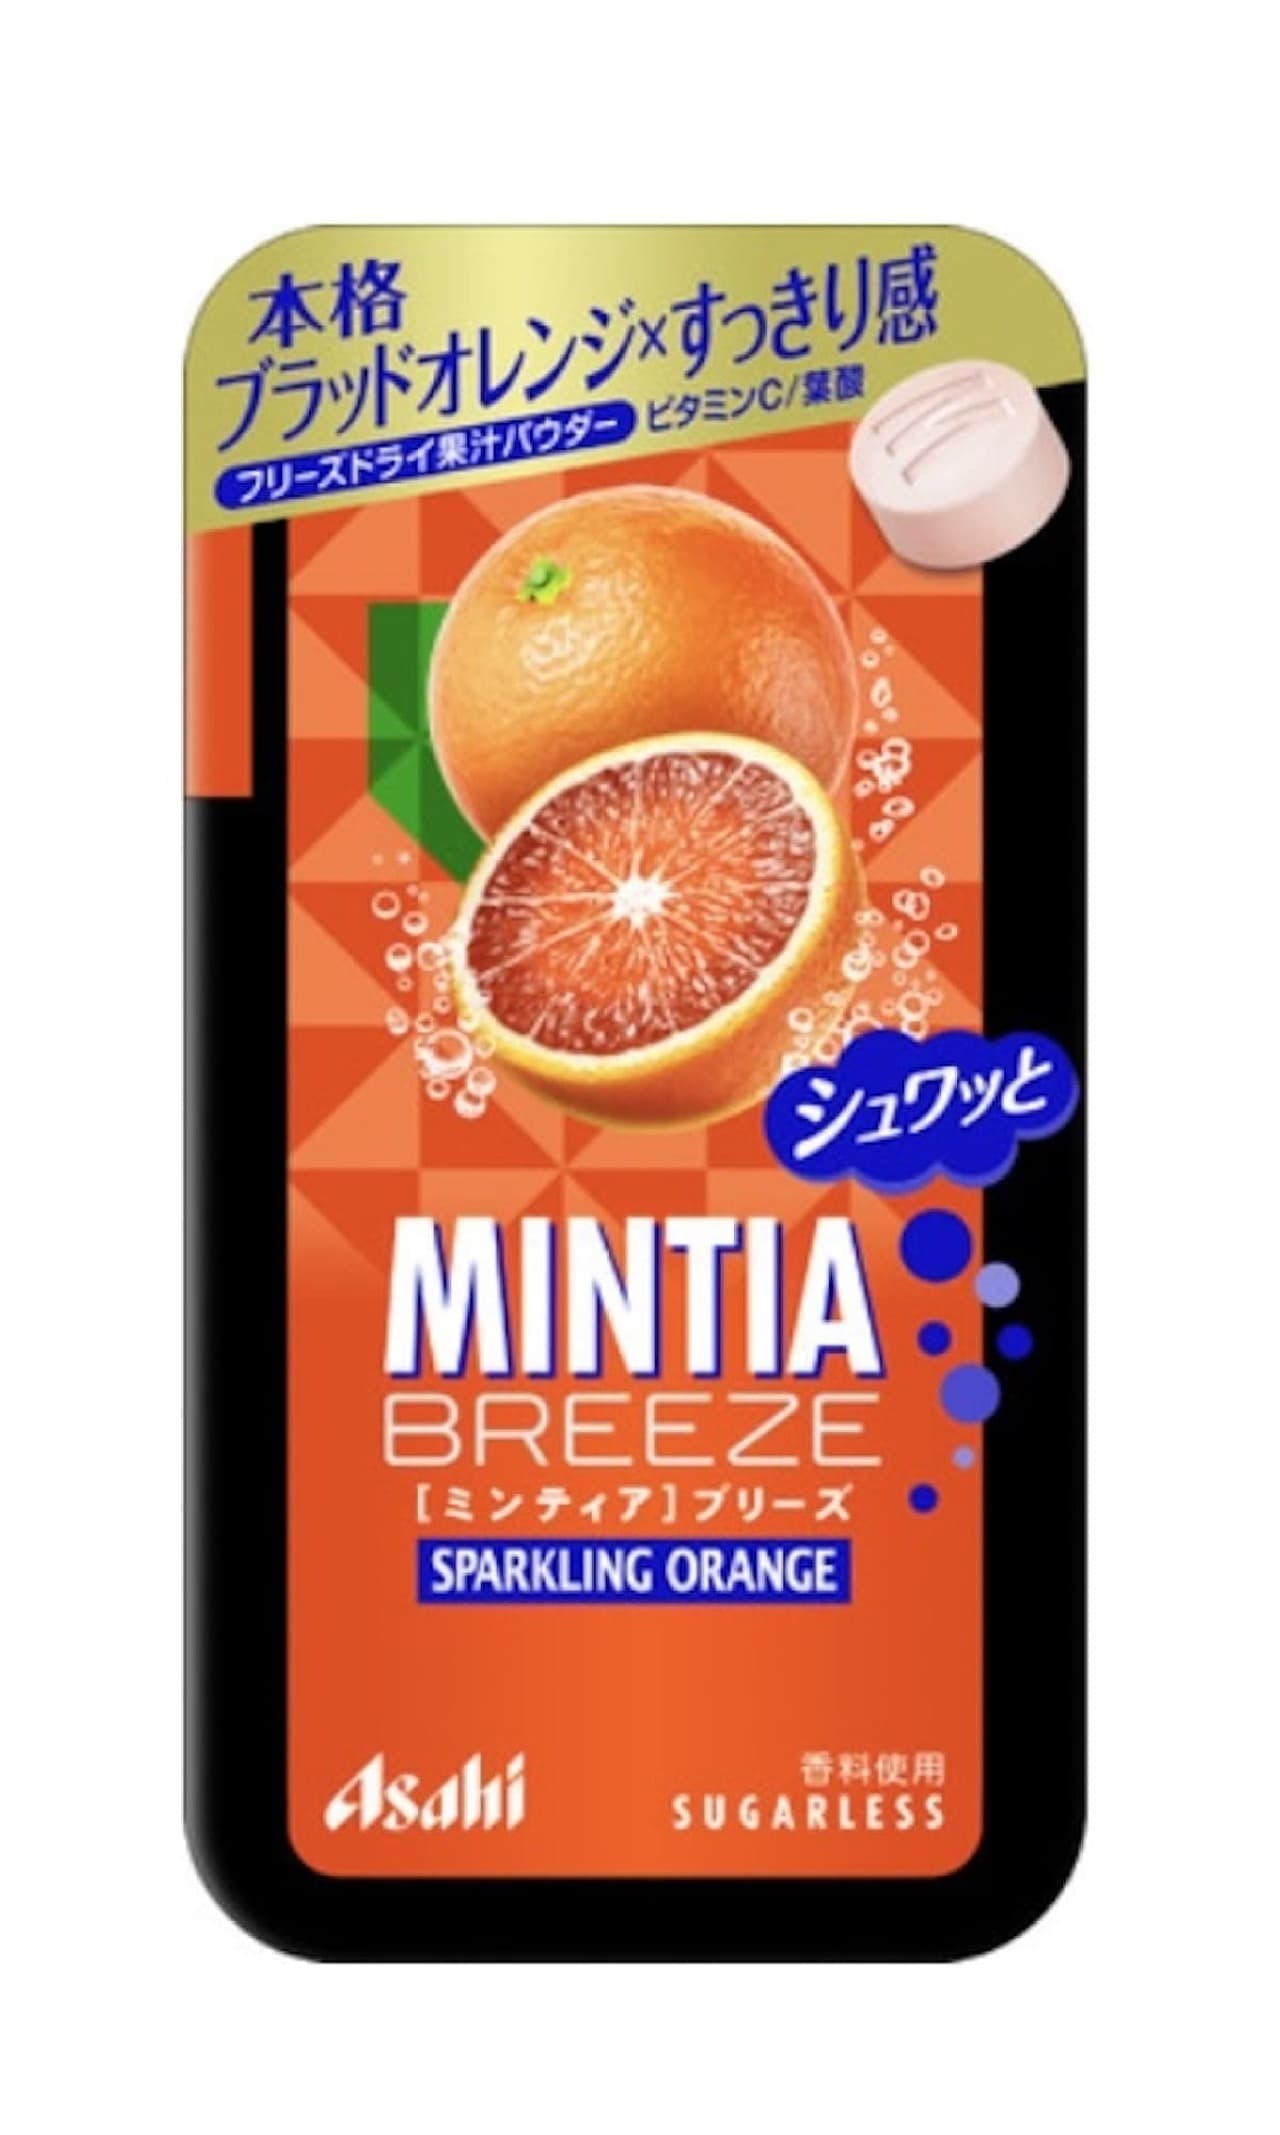 "Mintia Breeze Sparkling Orange" from Asahi Group